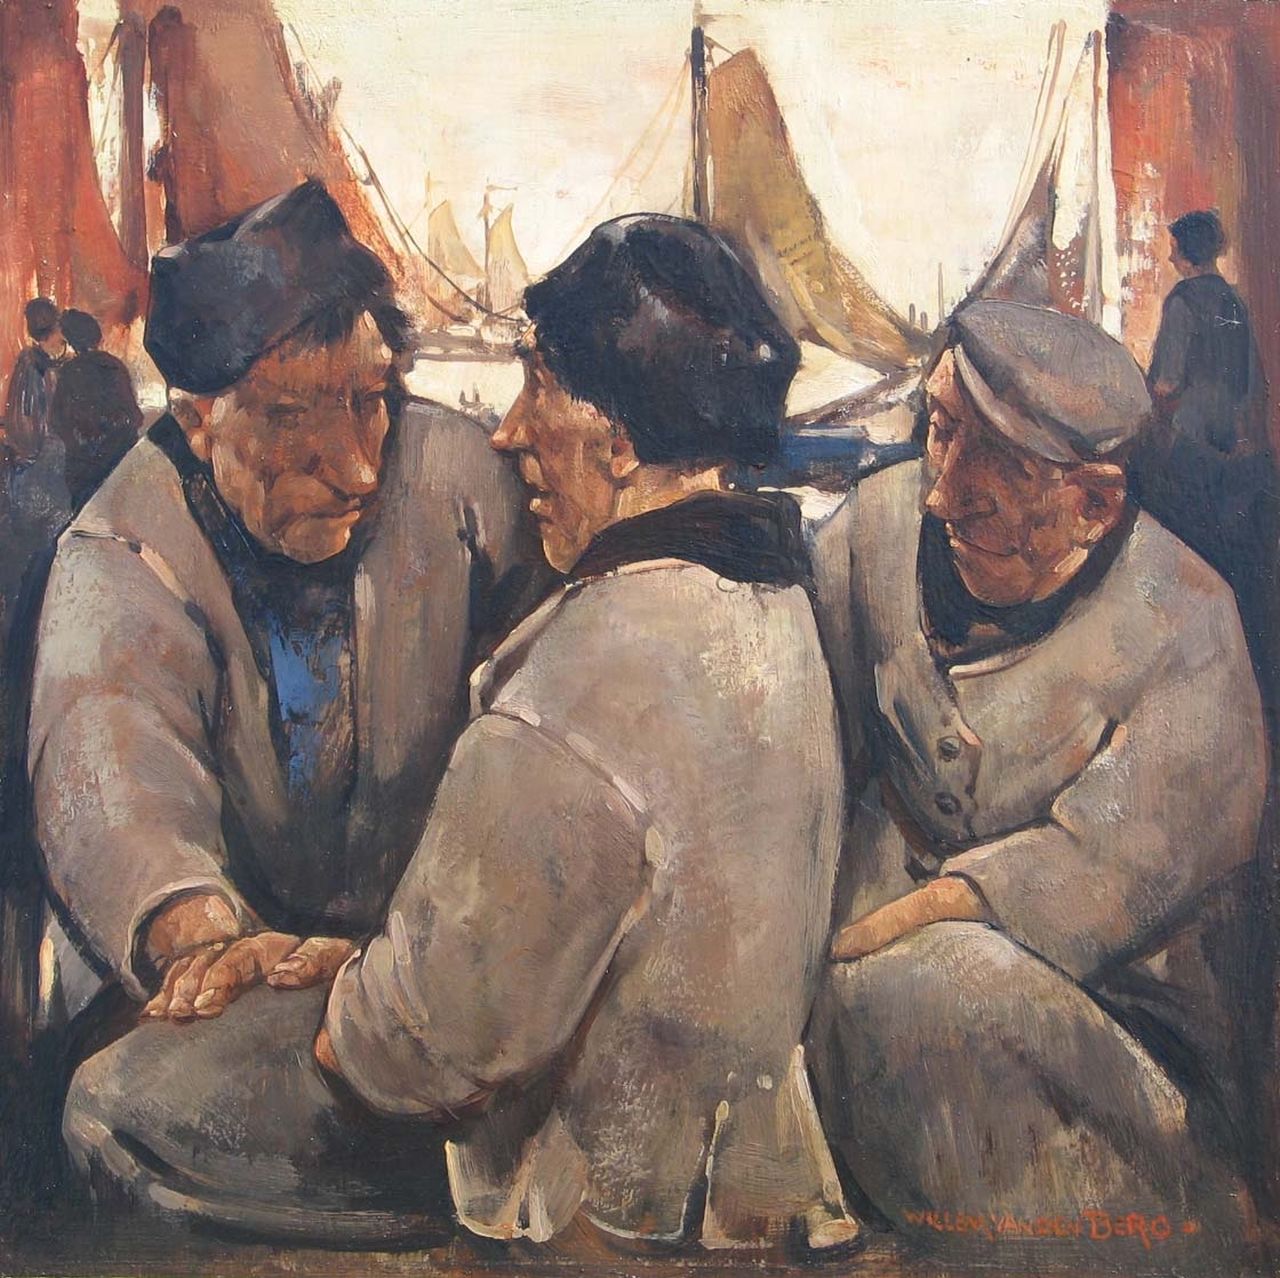 Berg W.H. van den | 'Willem' Hendrik van den Berg, Fishermen from Volendam, Öl auf Holz 25,5 x 25,5 cm, signed l.r.